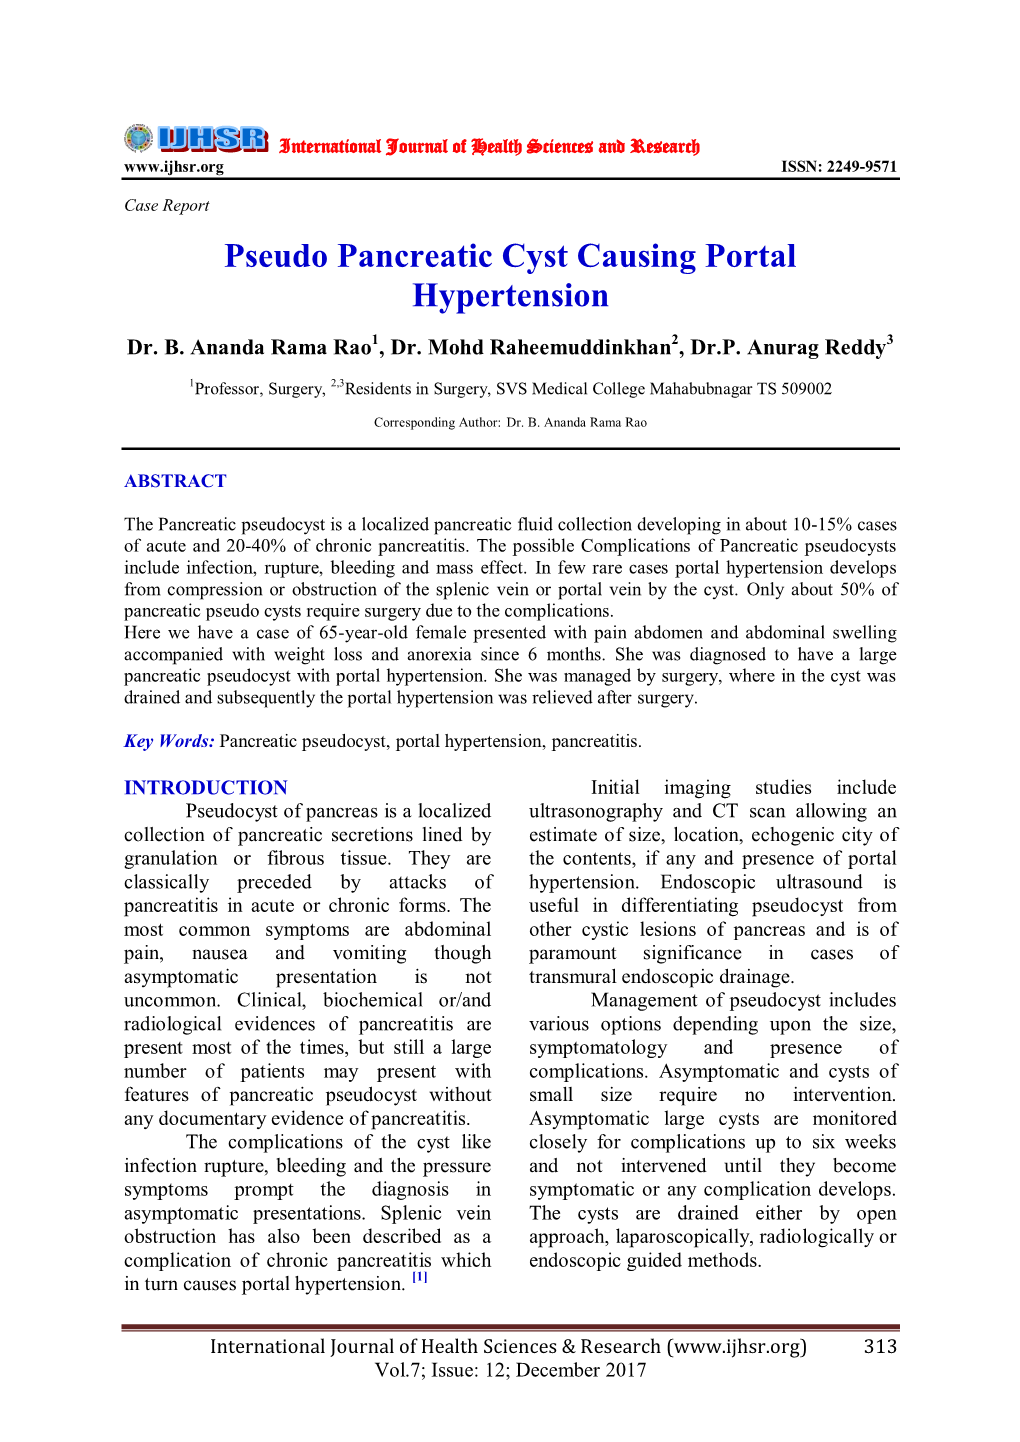 Pseudo Pancreatic Cyst Causing Portal Hypertension